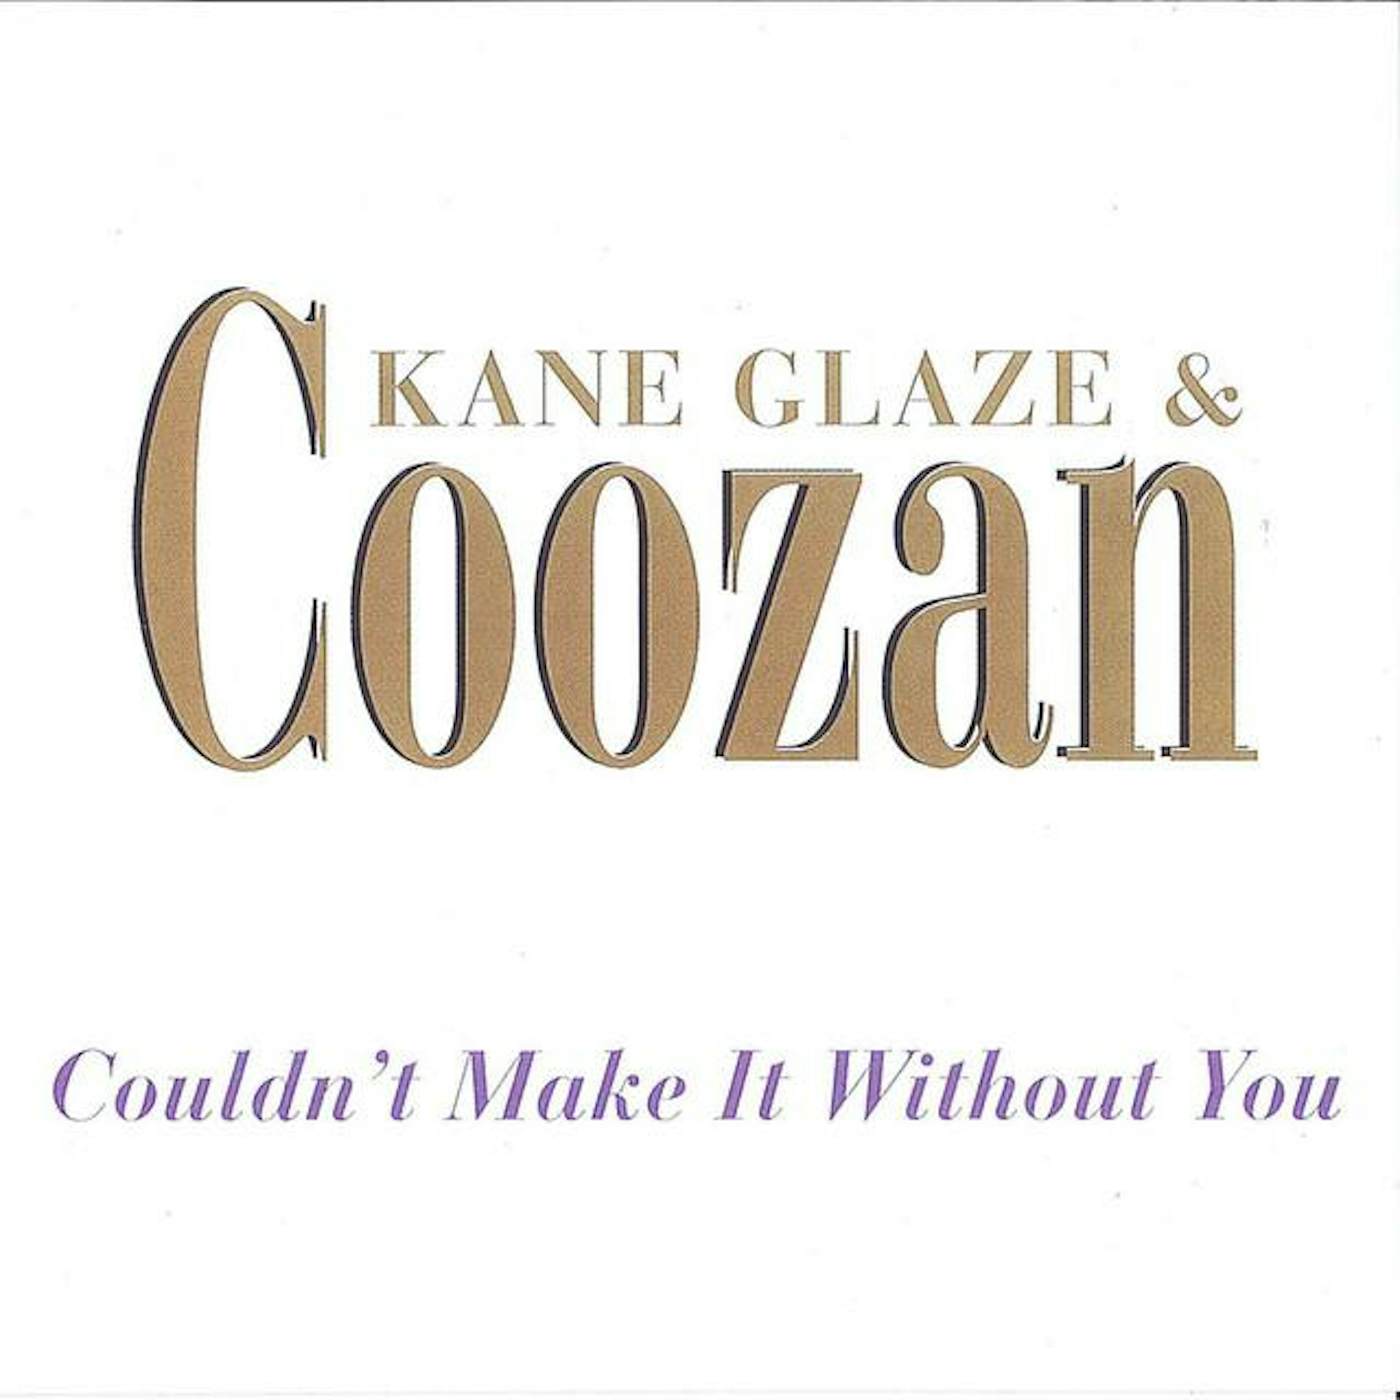 Kane Glaze & Coozan